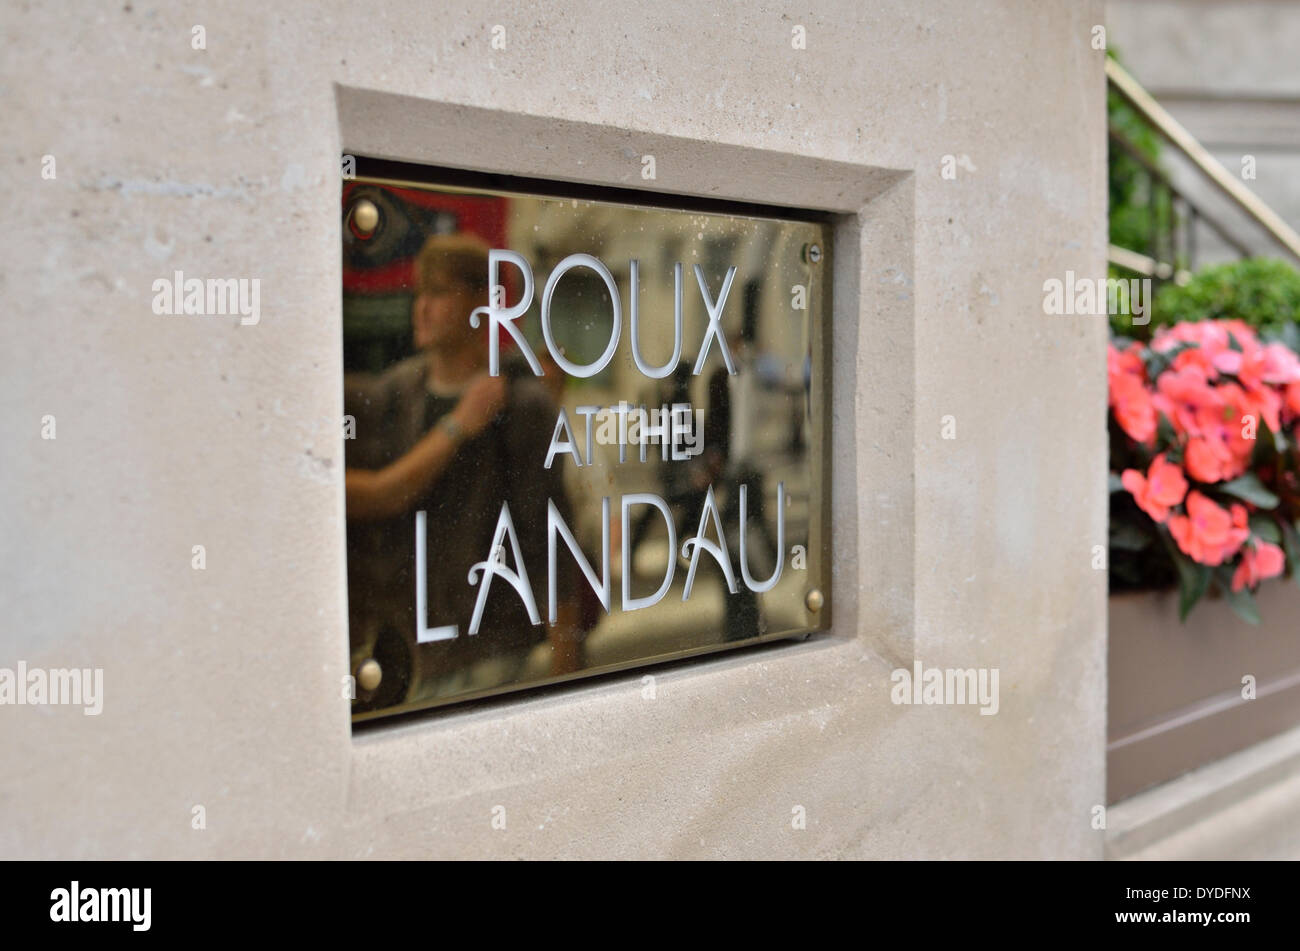 Roux at The Landau Restaurant. Stock Photo